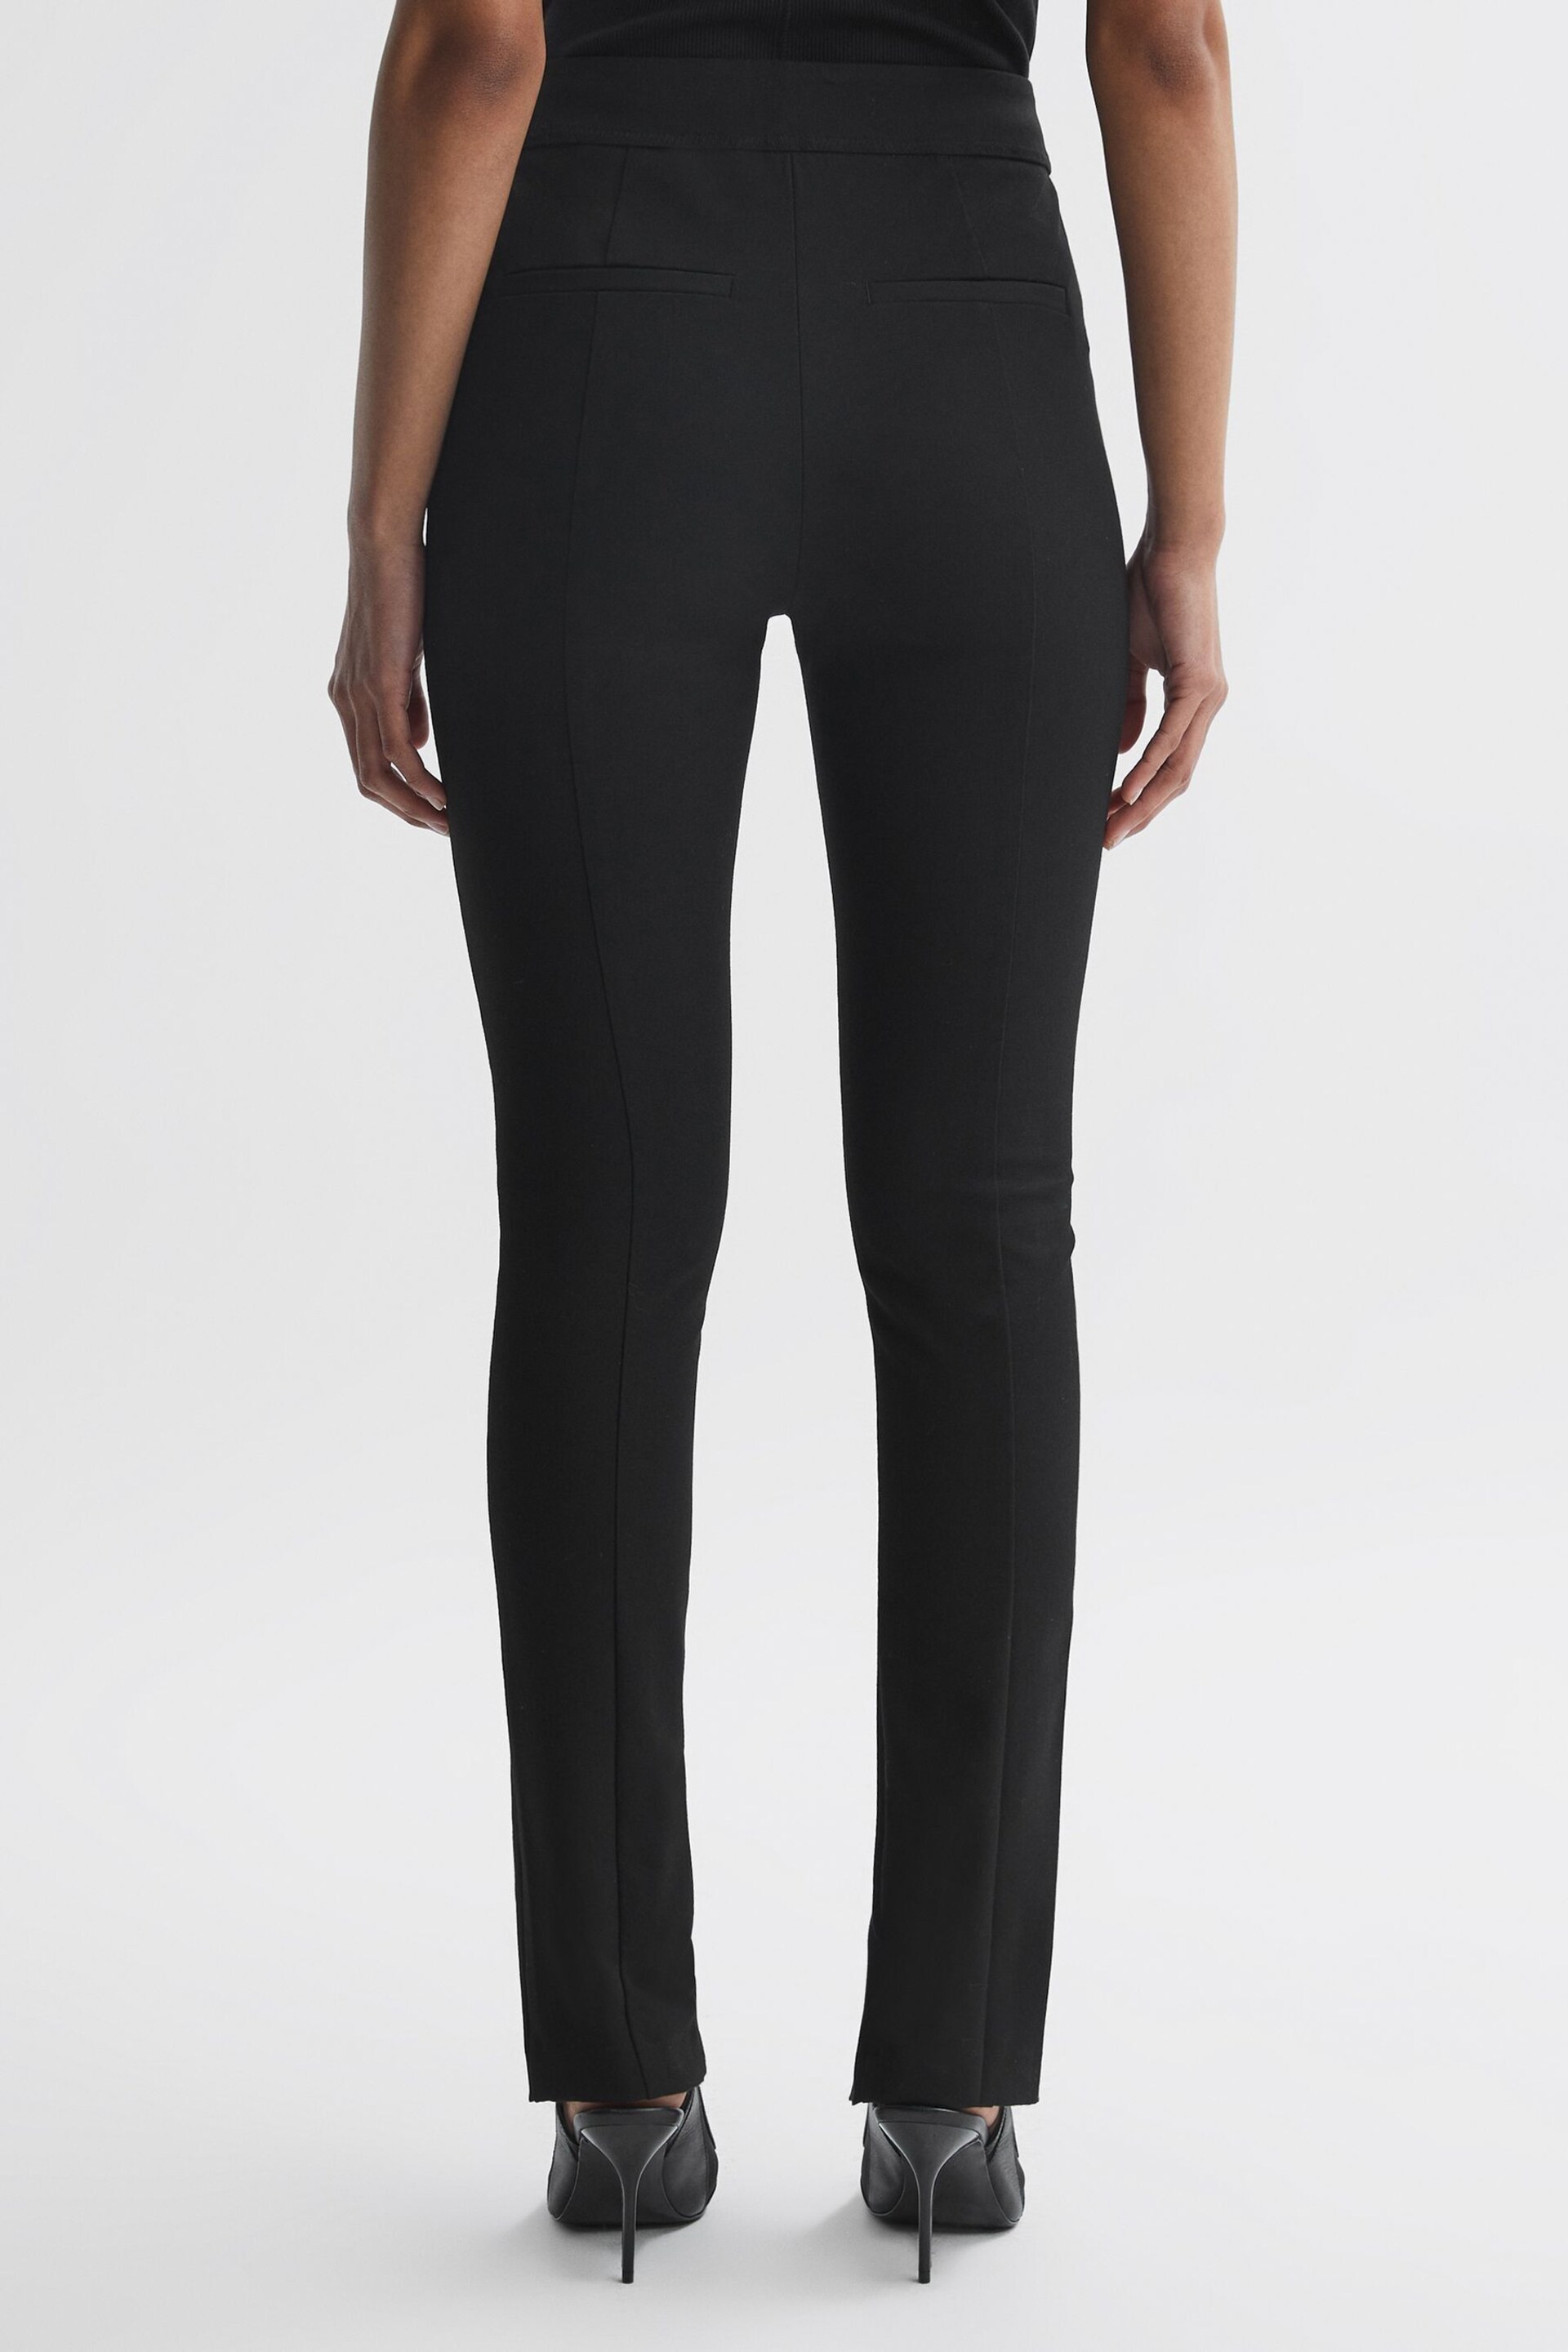 Reiss Black Jayne Skinny Fit Split Front Trousers - Image 4 of 4